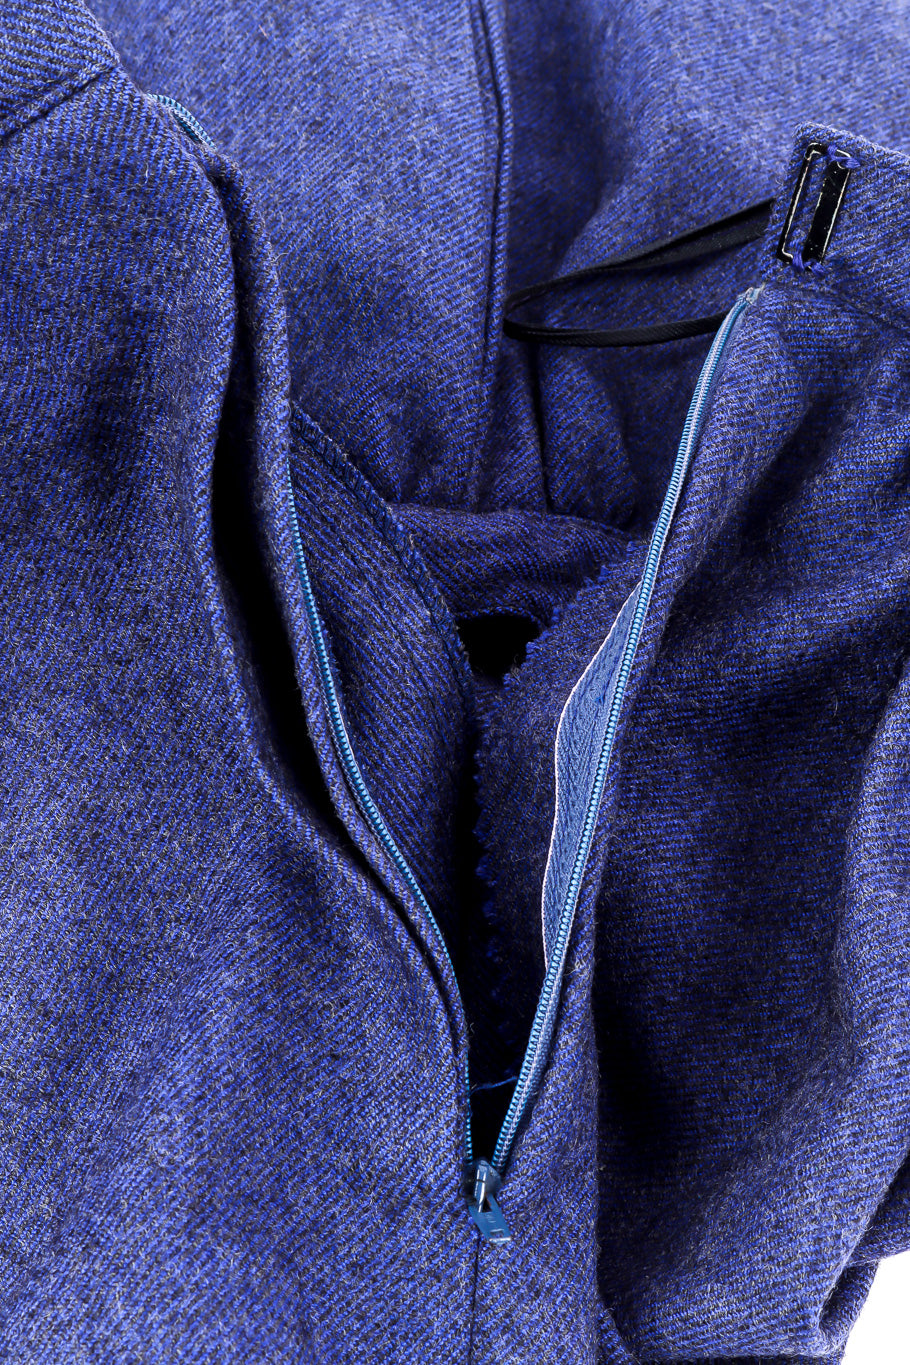 Valentino Boutique cotton denim top and skirt set side zipper details @recessla